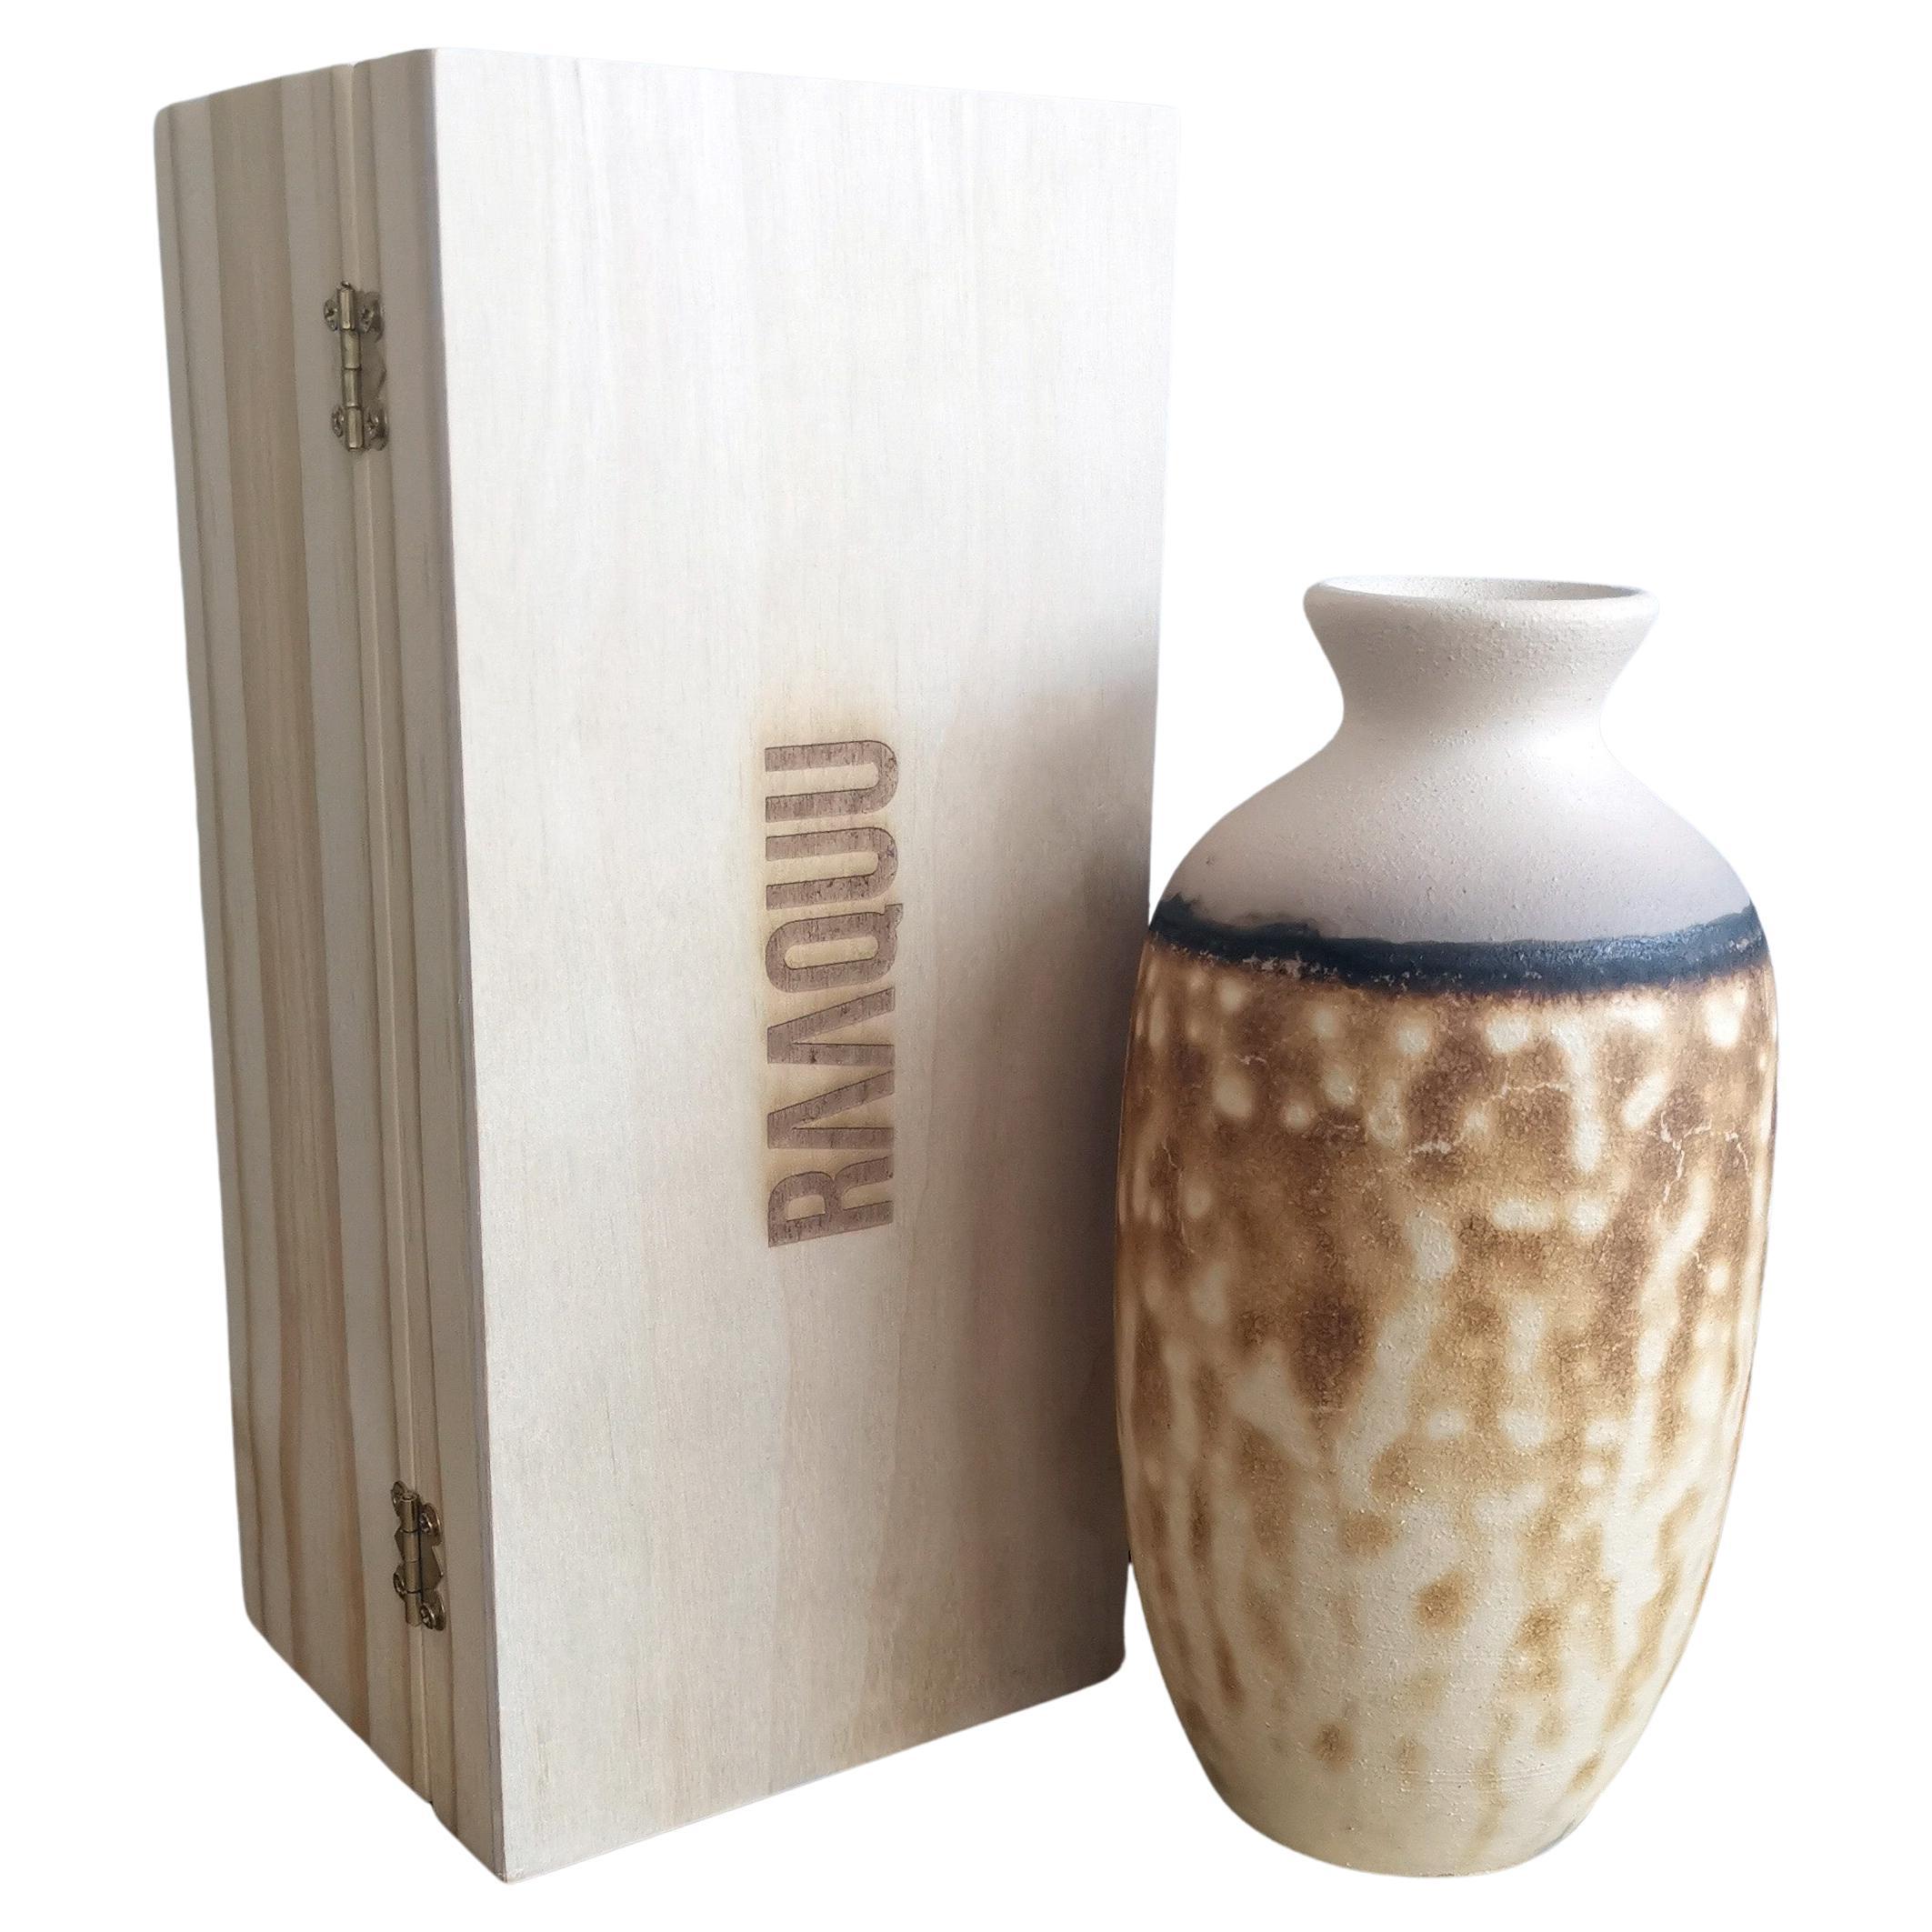 Koban Raku-Keramikvase mit Geschenkschachtel, Obvara, handgefertigte Keramik